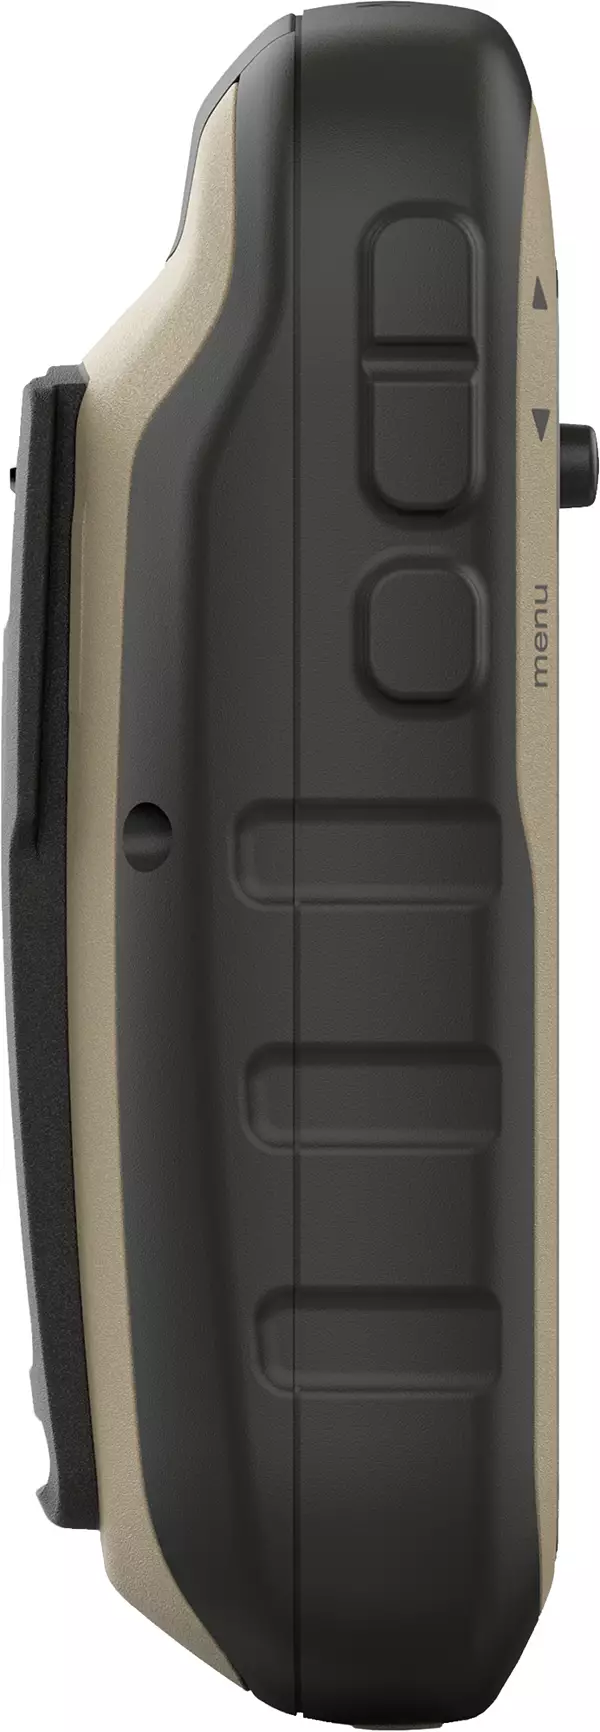 Garmin eTrex 32x Rugged Handheld GPS with Navigation Sensors